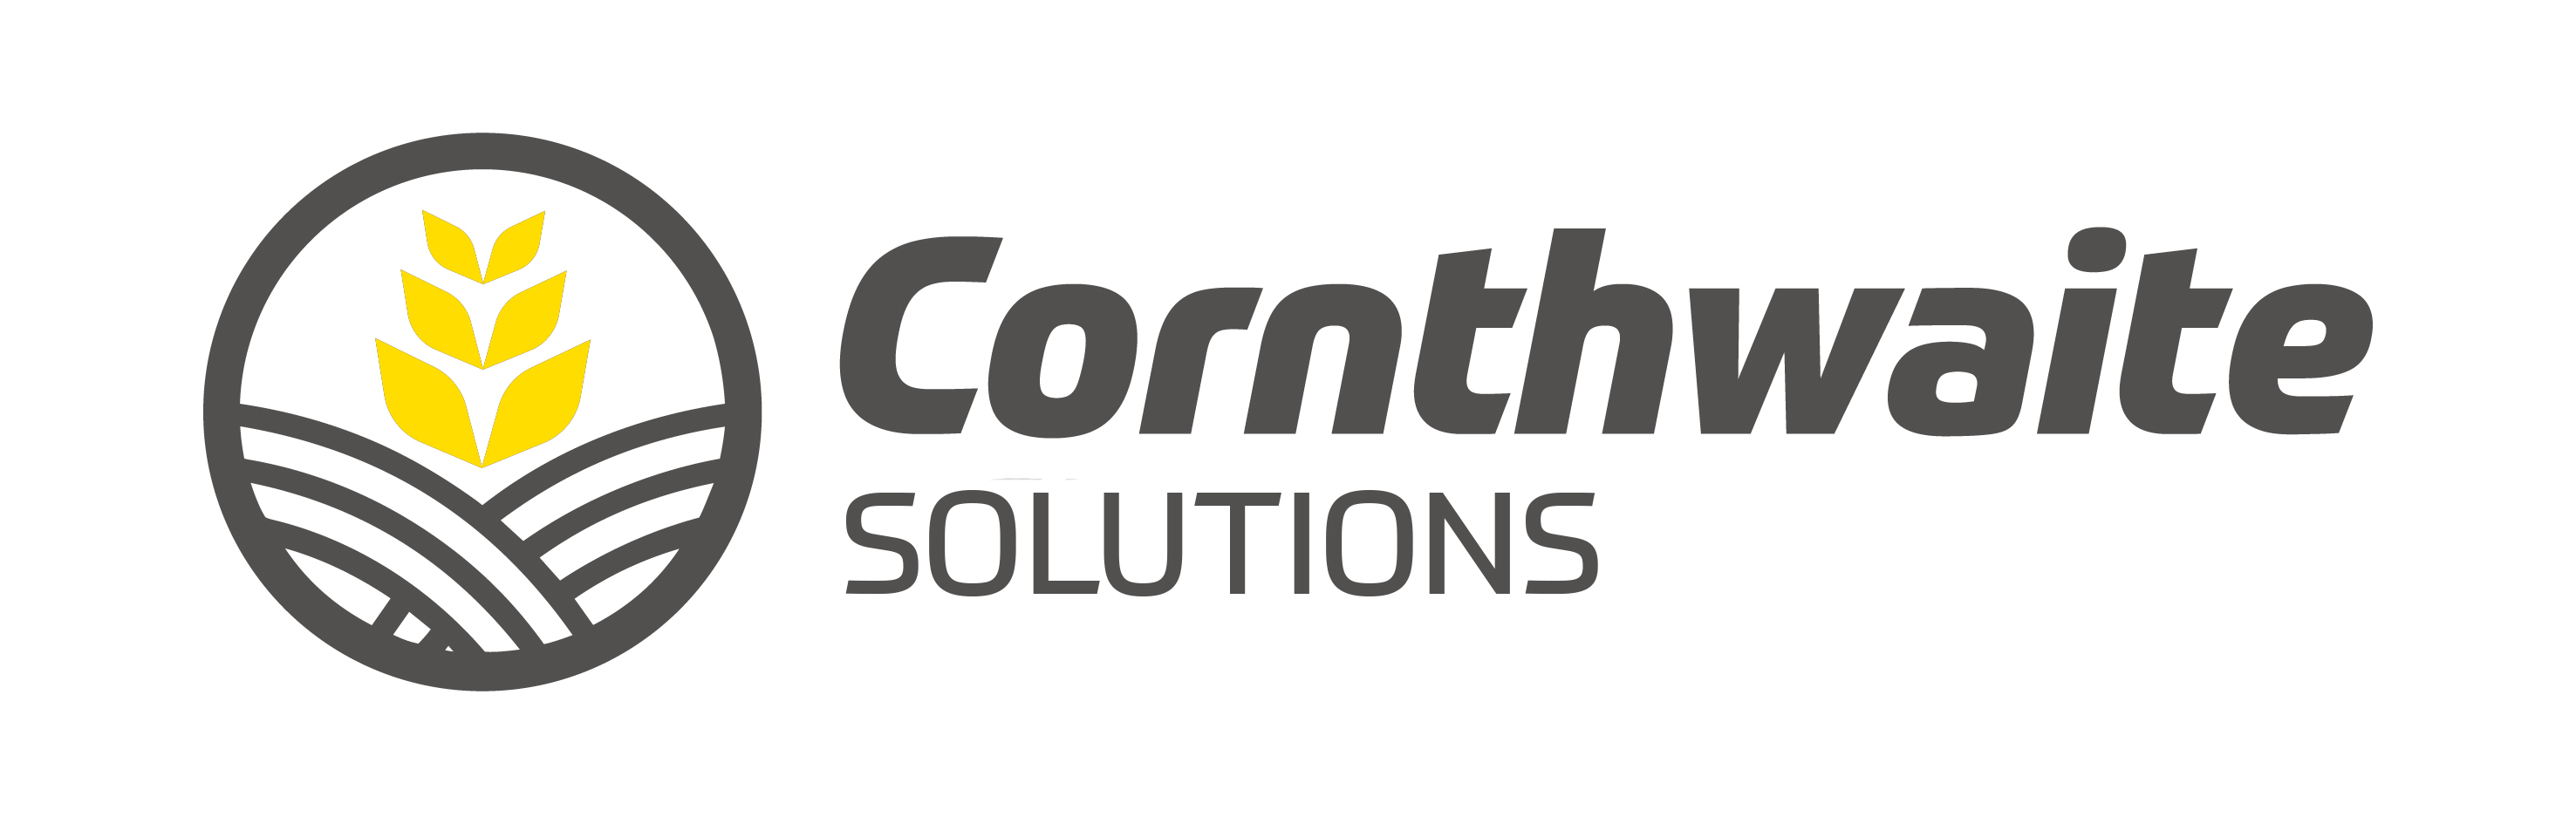 Cornthwaite logo cornthwaite solutions logo